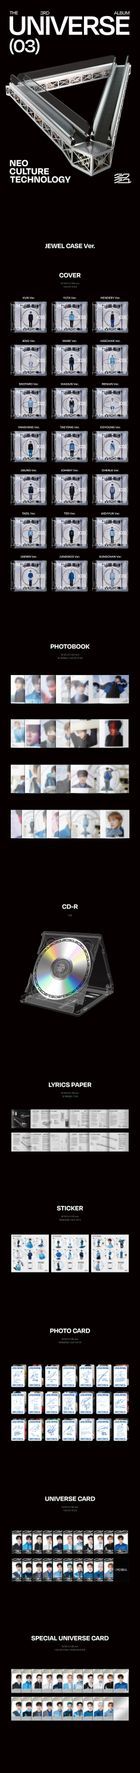 NCT Vol. 3 - Universe (Jewel Case Version) (Jae Min Version)